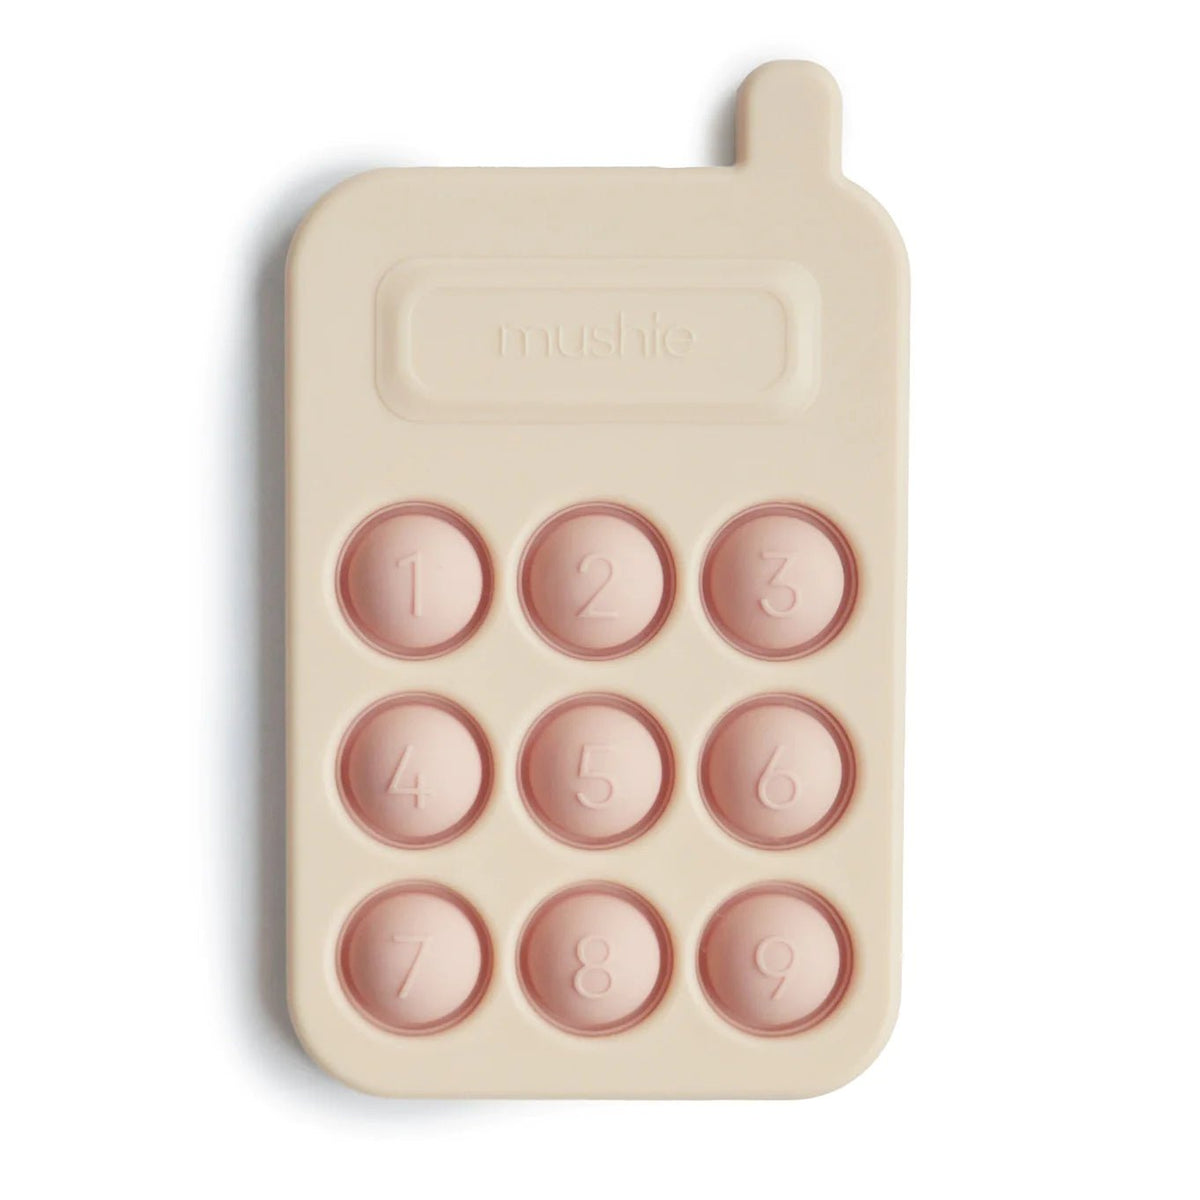 Phone Press Toy by Mushie - Maude Kids Decor